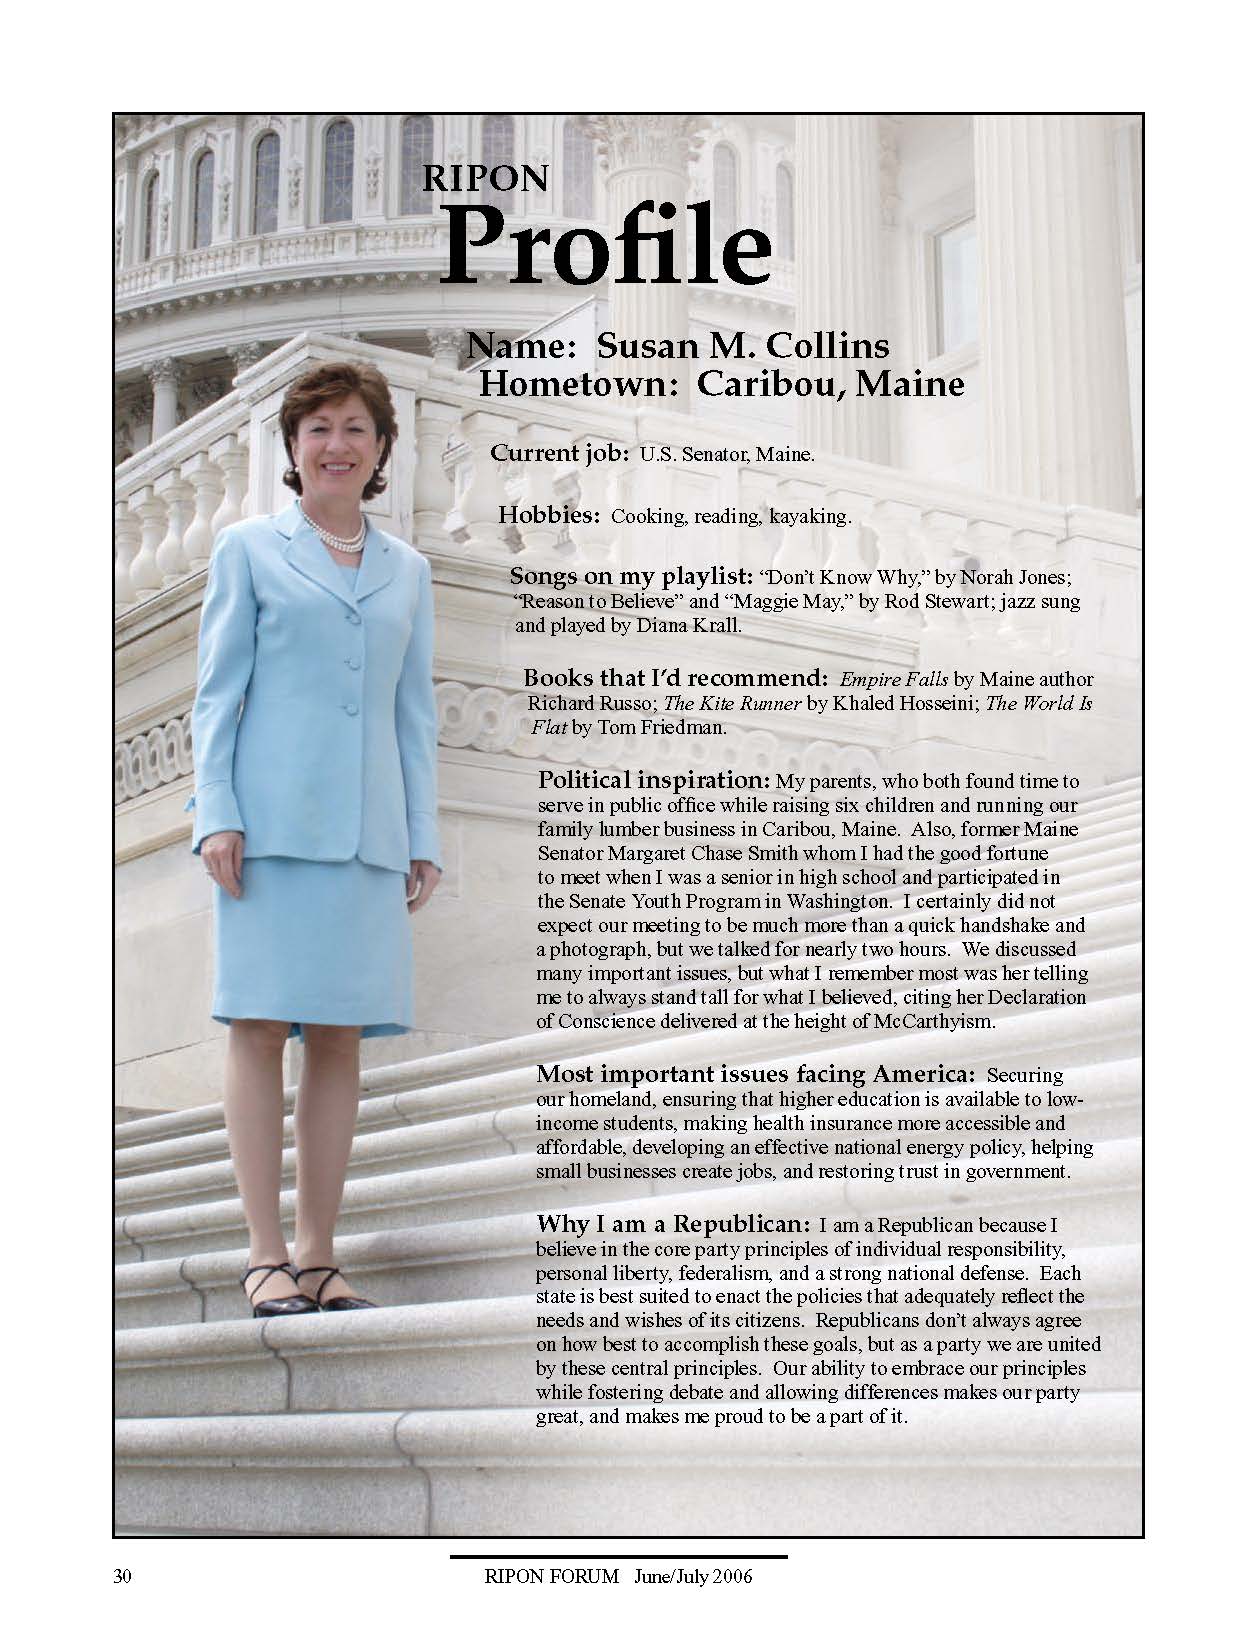 Ripon Profile of Susan Collins